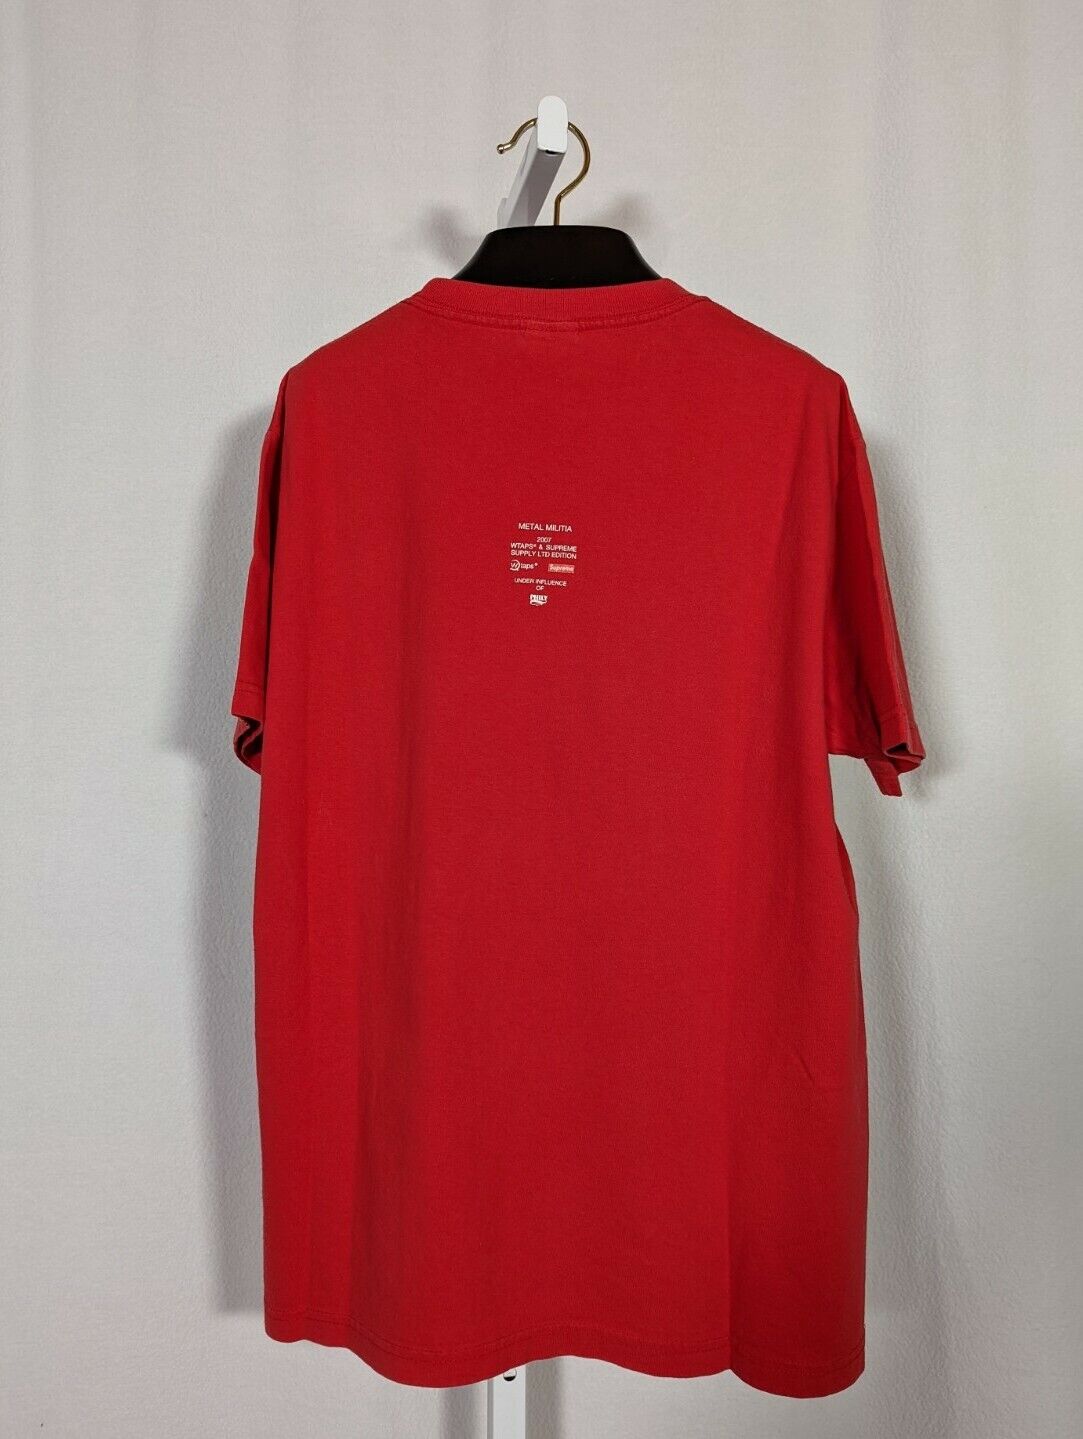 Supreme x WTAPS Metal Militia Red T Shirt Large